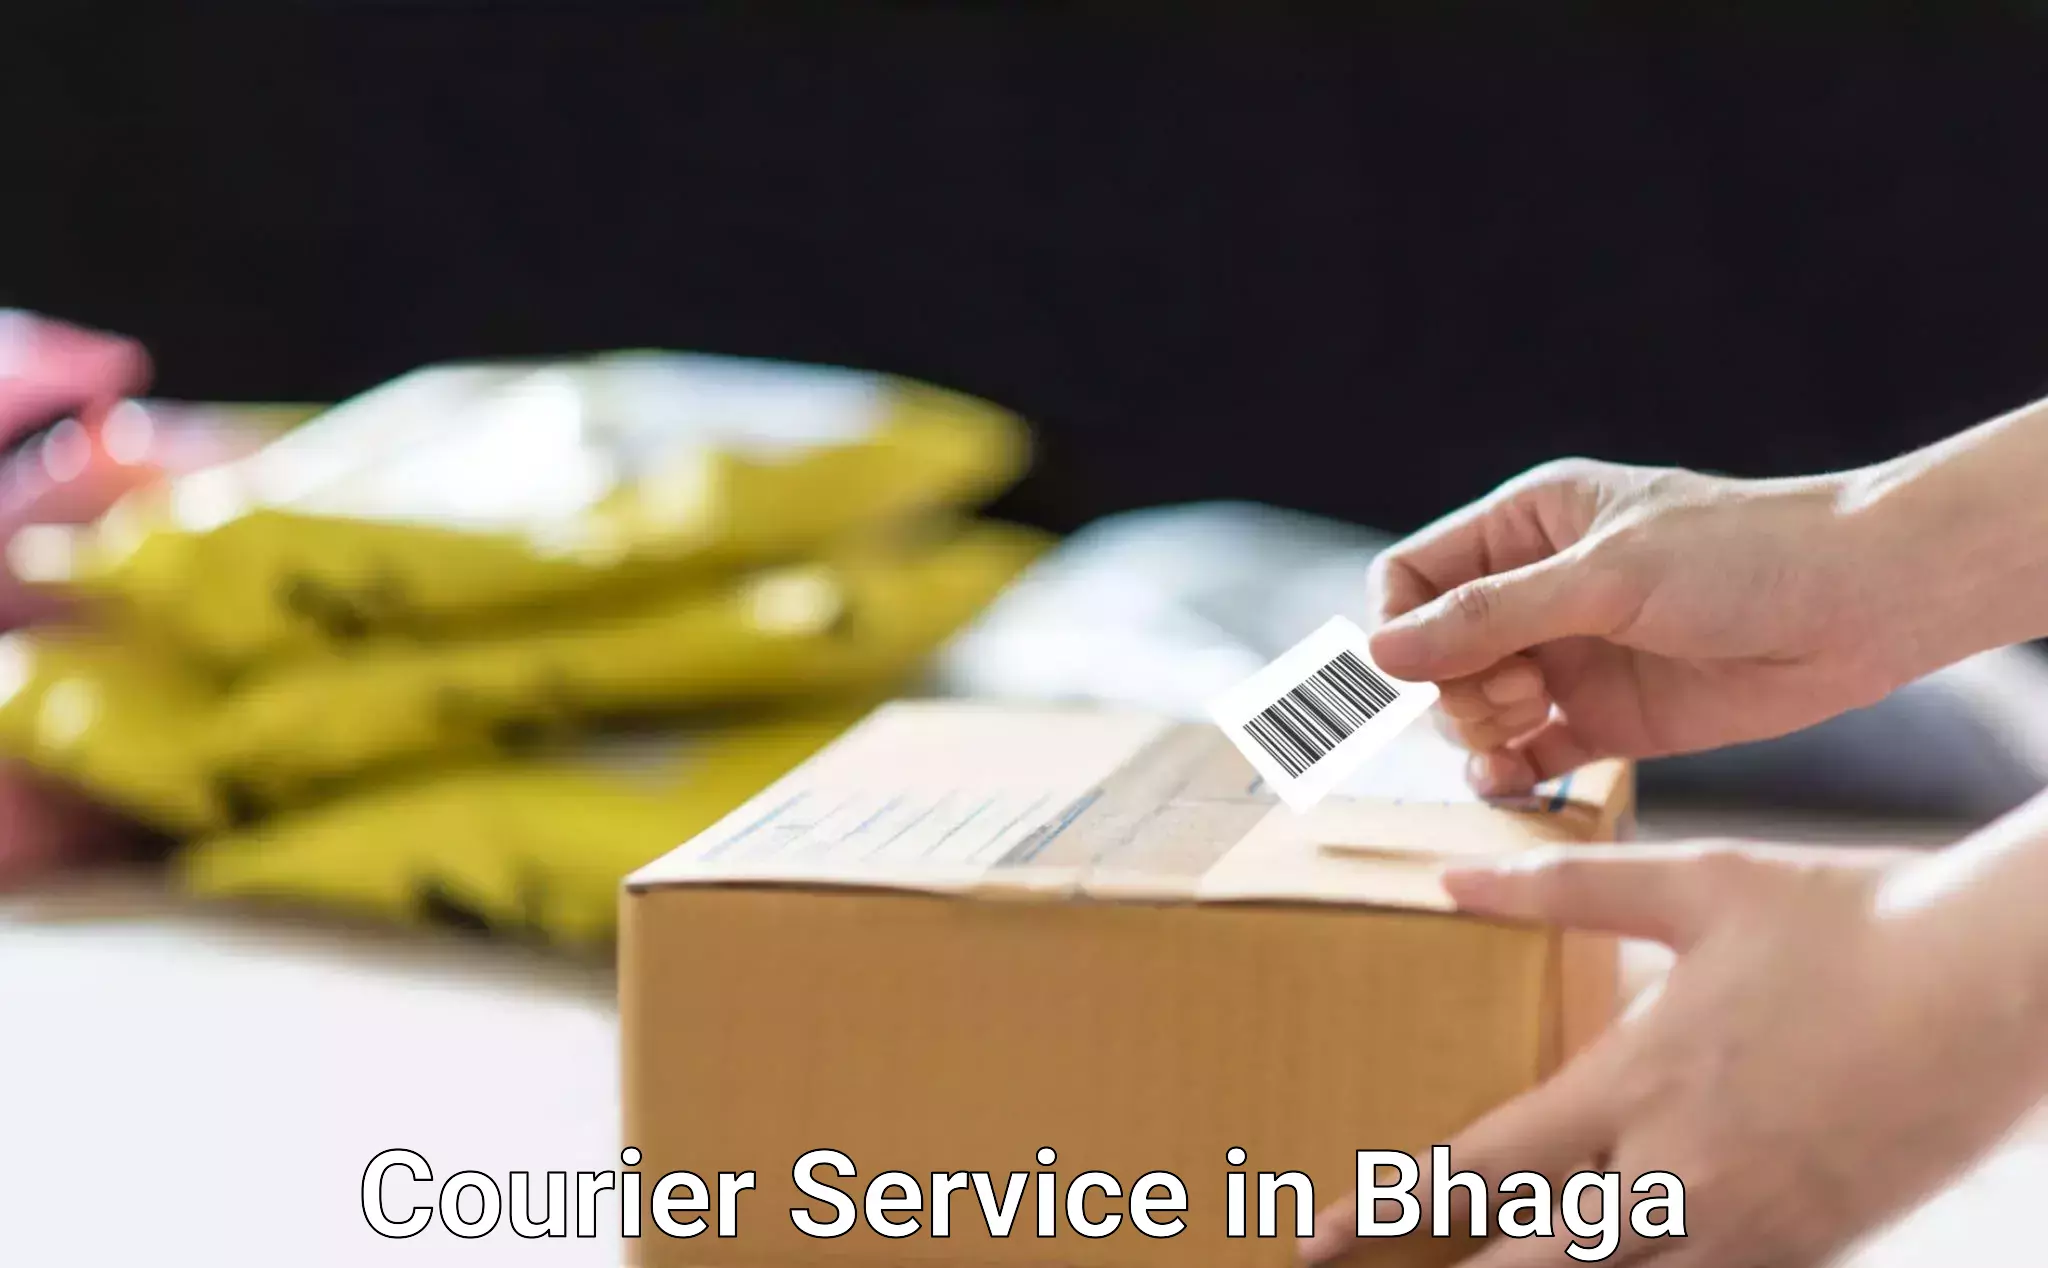 Specialized shipment handling in Bhaga